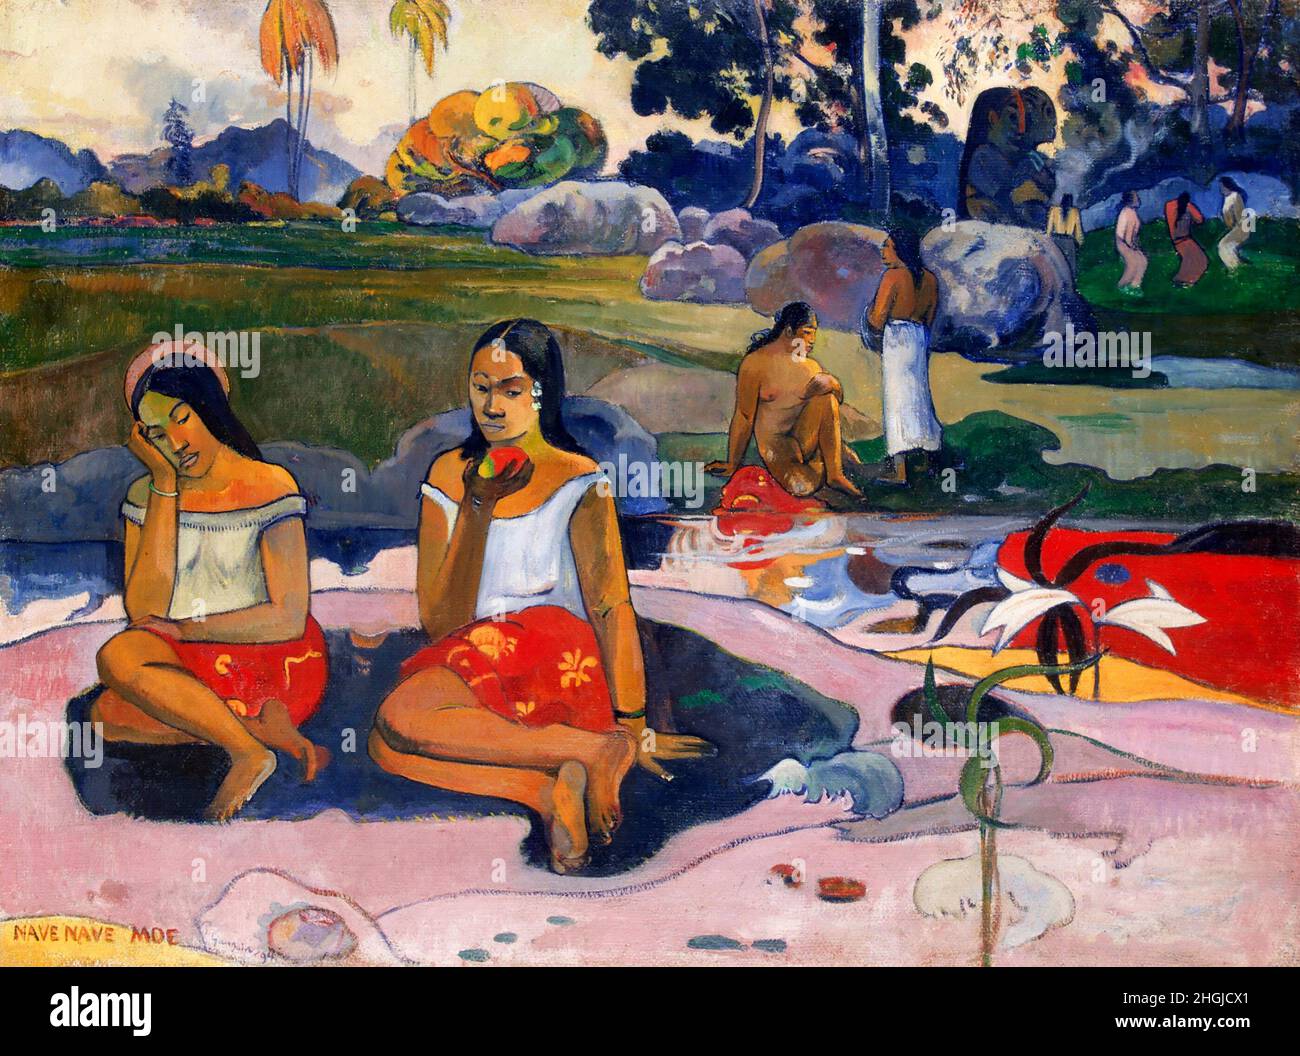 Primavera Sacra: Dolci sogni (navata navata moe) di Paul Gauguin (1848-1903), olio su tela, 1894 Foto Stock